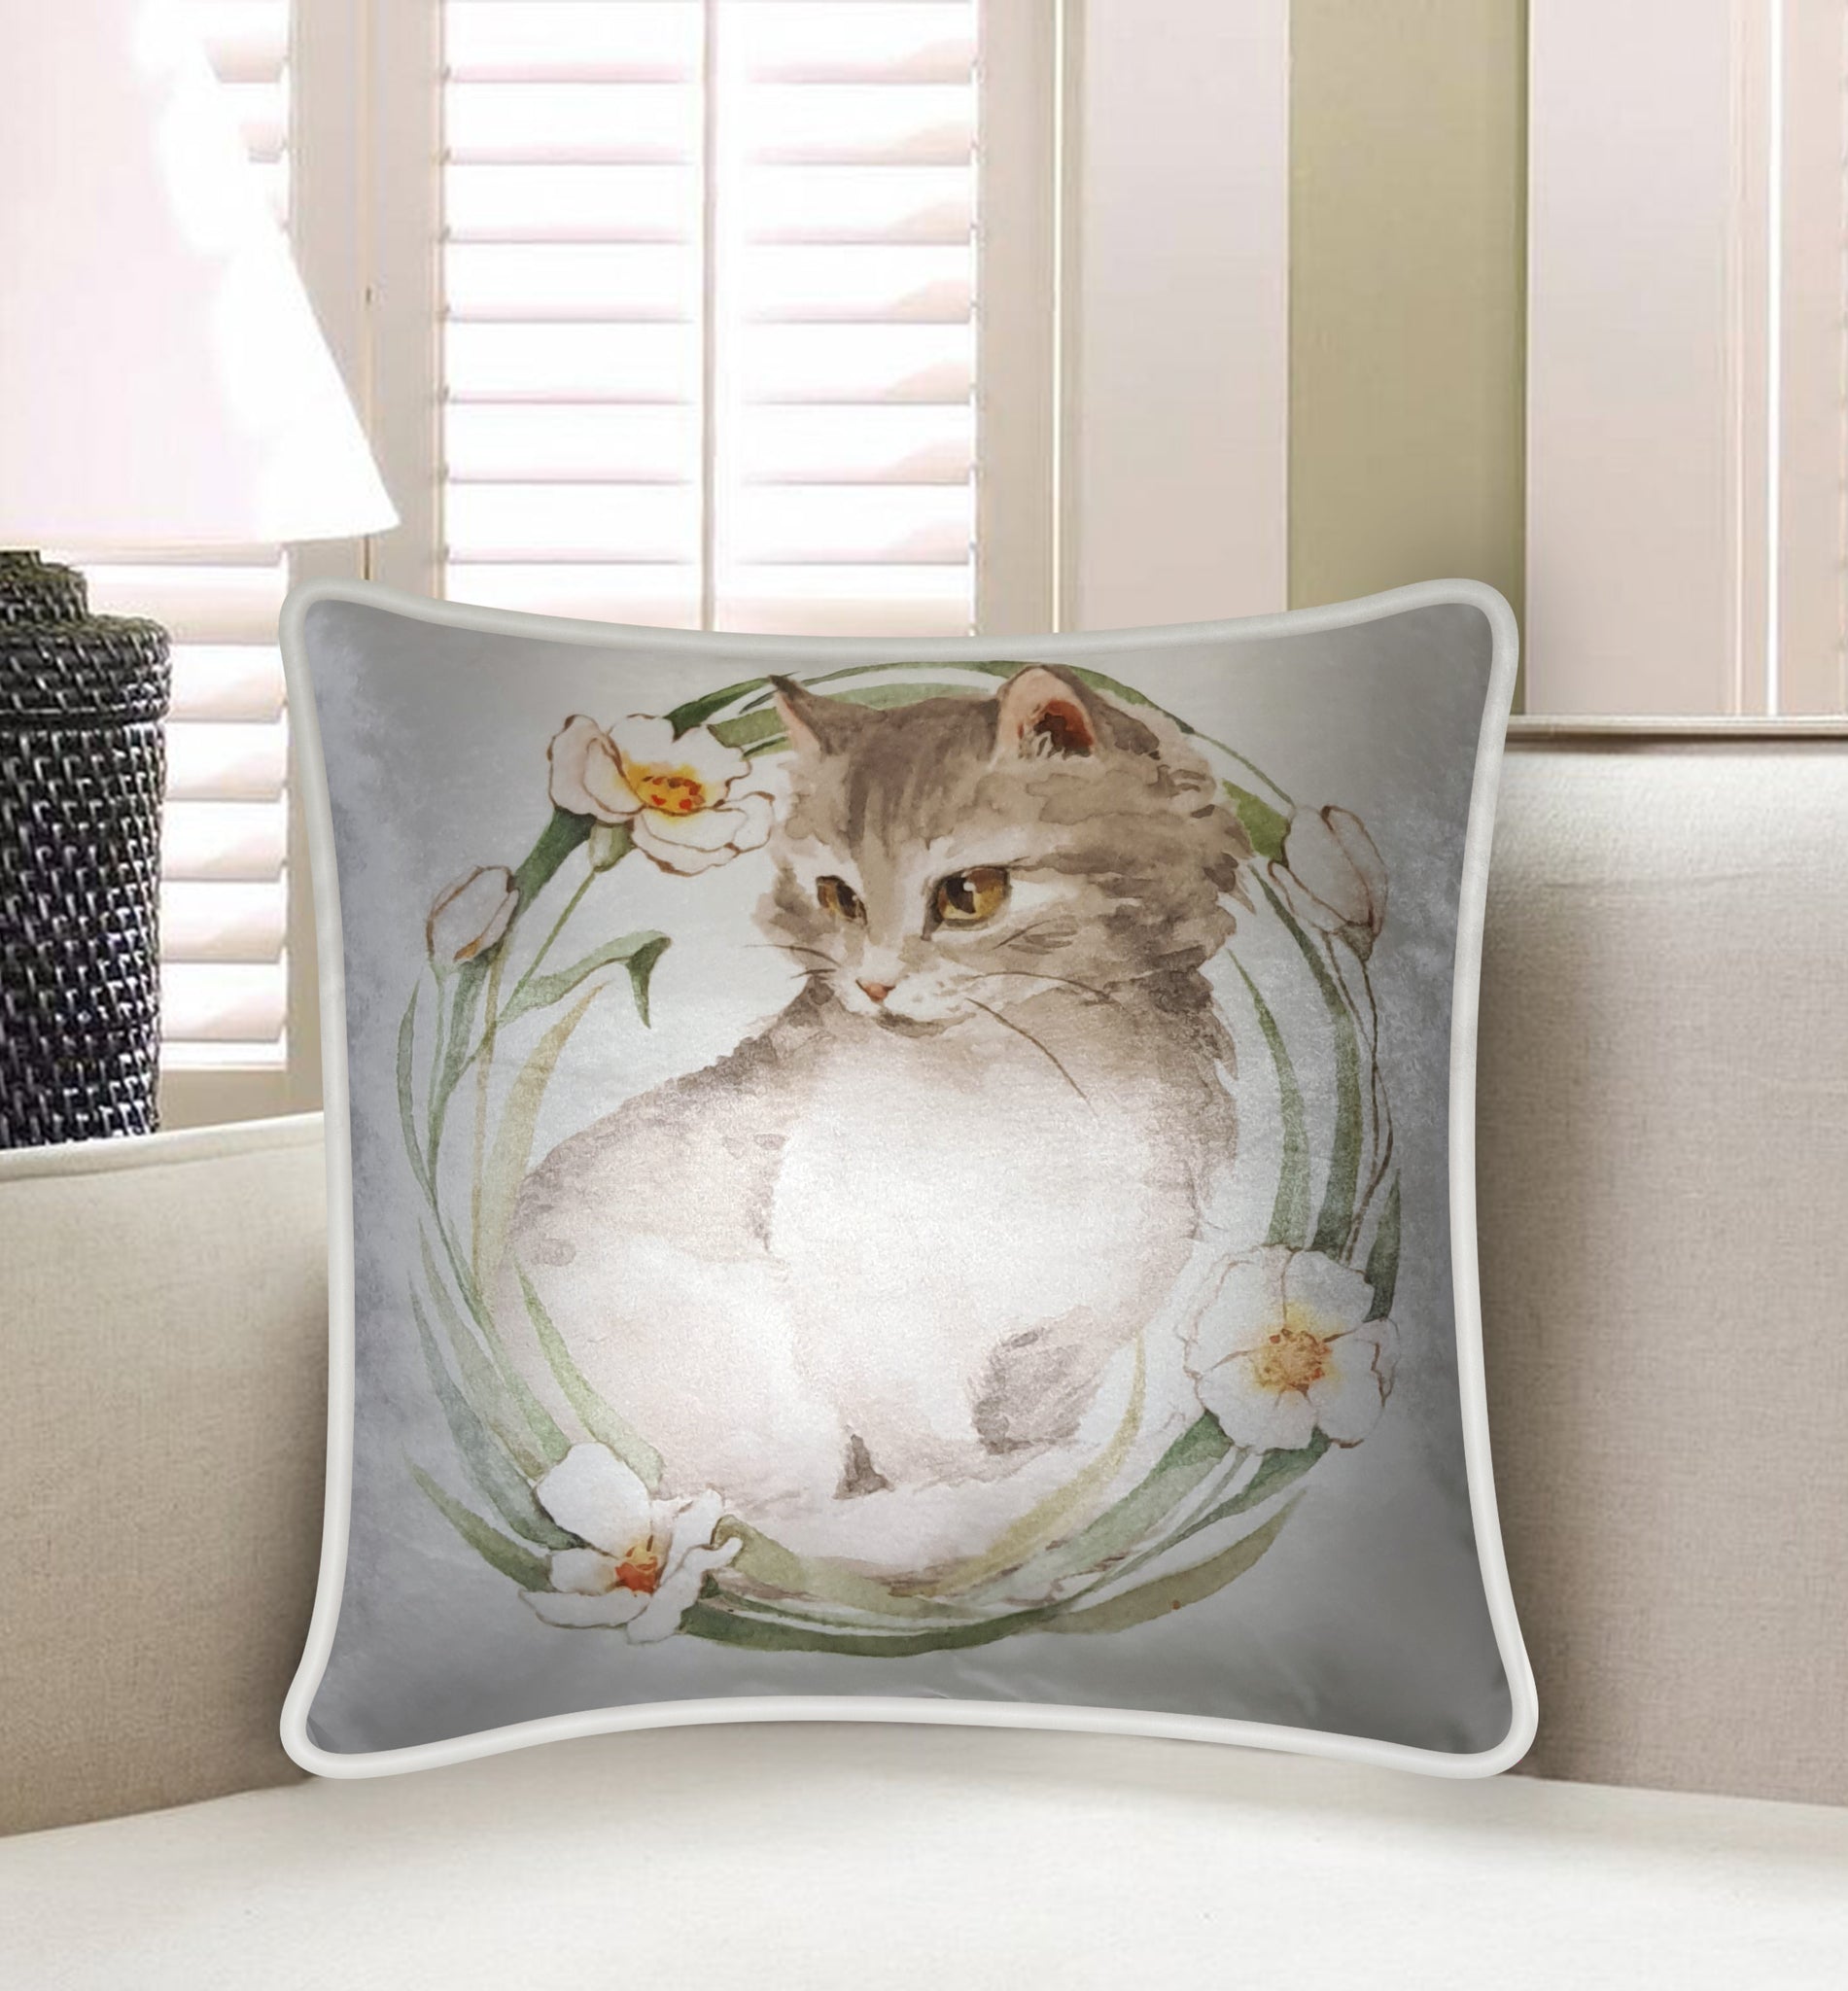  Velvet Cushion Cover Cute Kitten and Flowers Decorative Pillowcase Modern Home Decor Throw Pillow for Sofa Chair 45x45 cm 